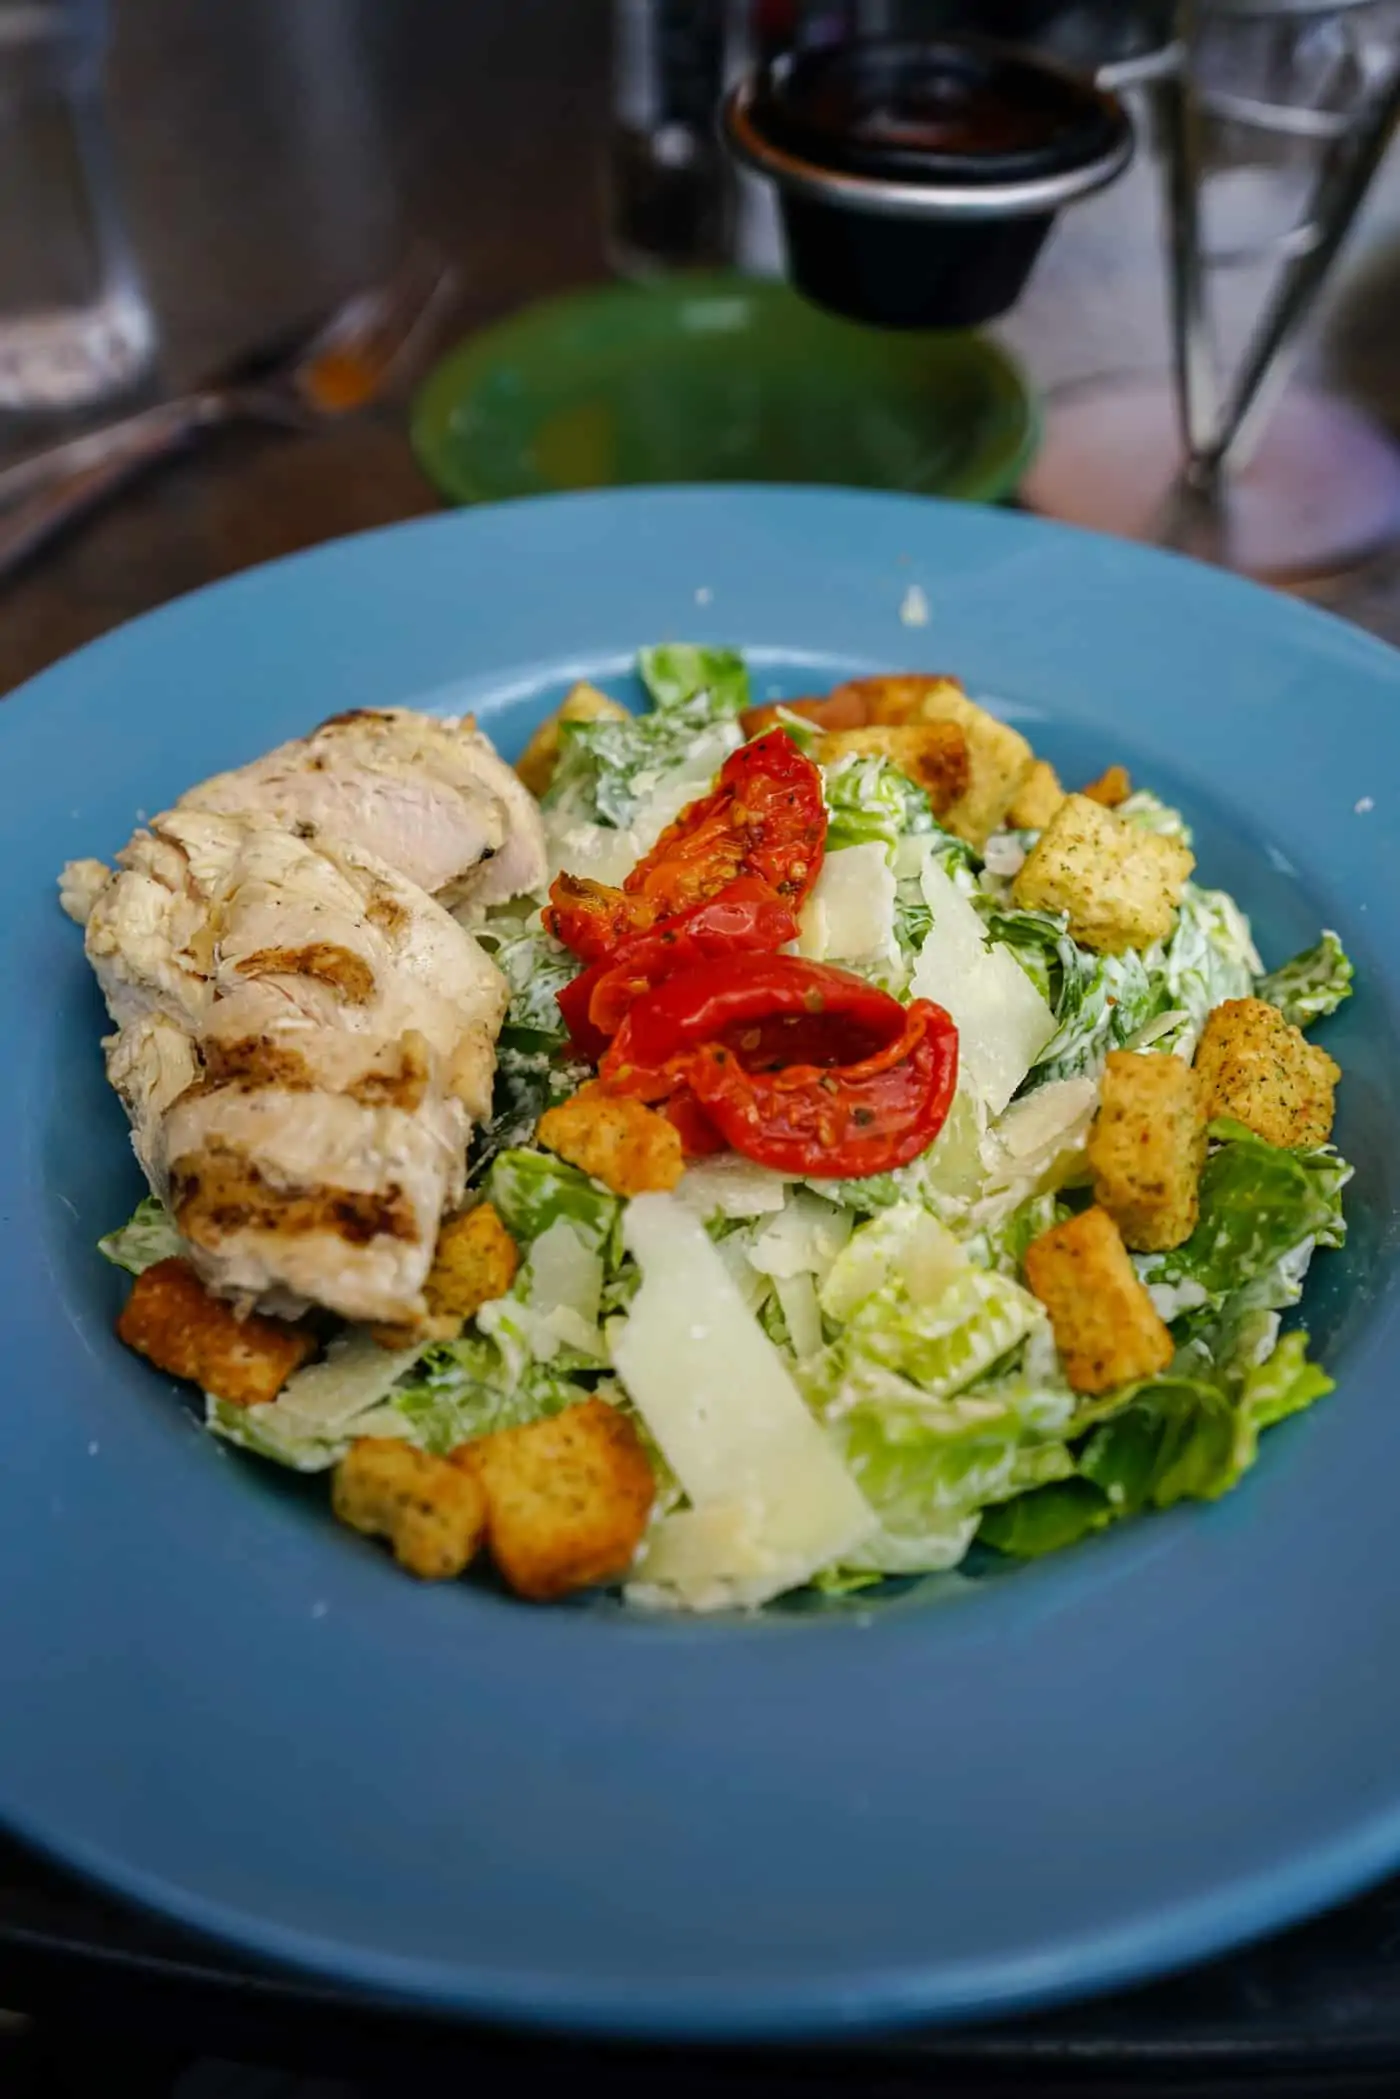 Chicken caesar salad